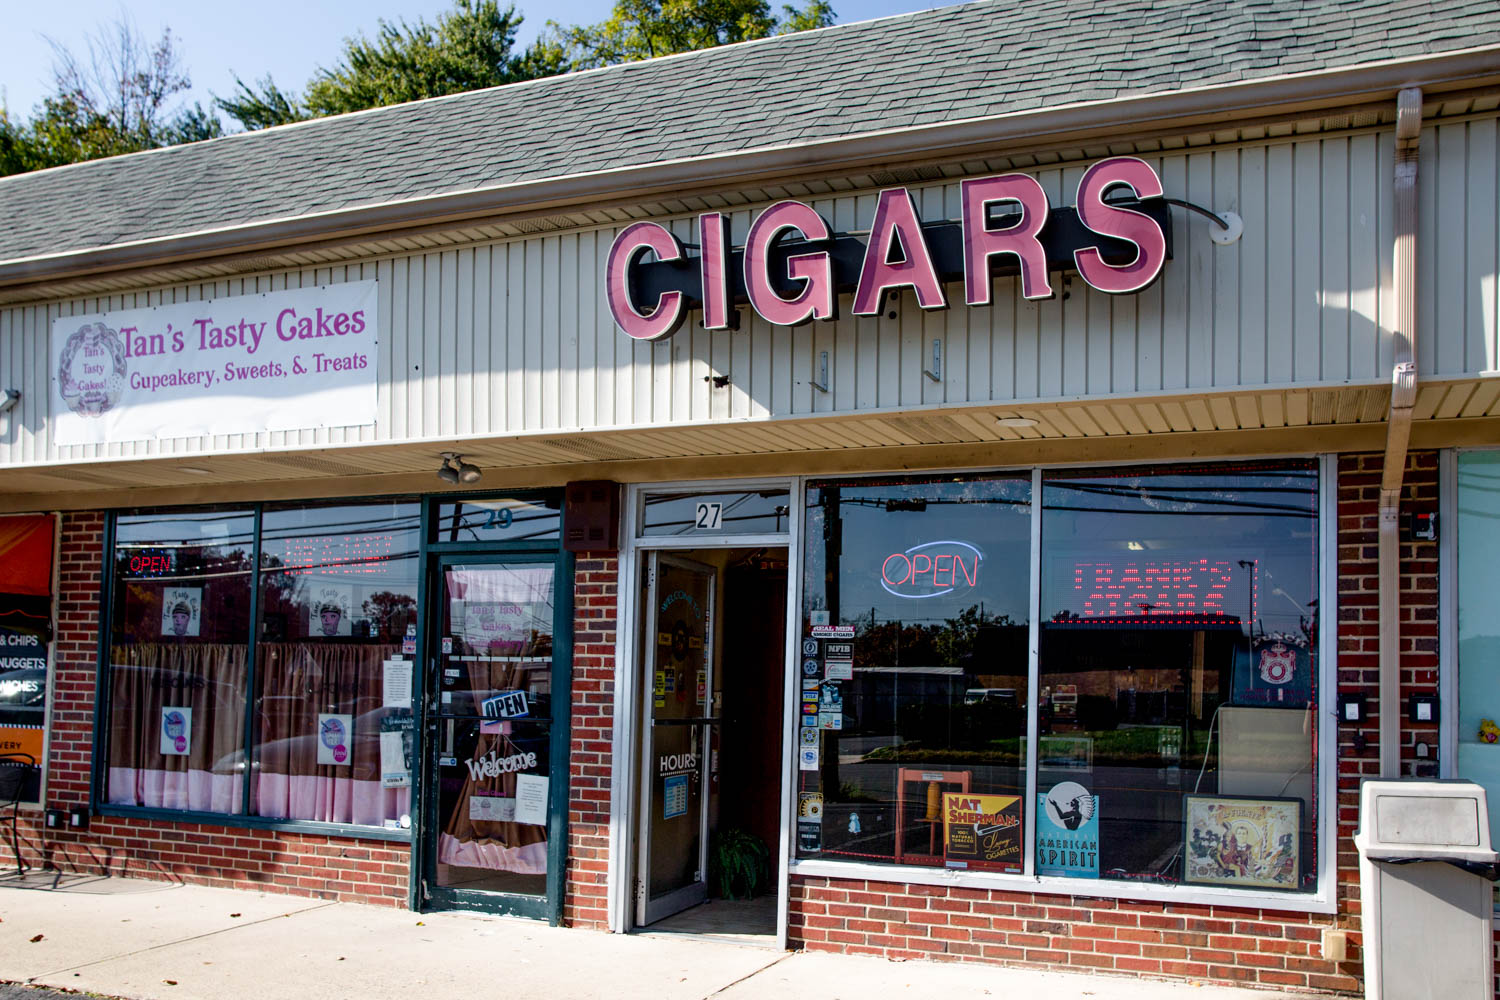 Frank's Cigars